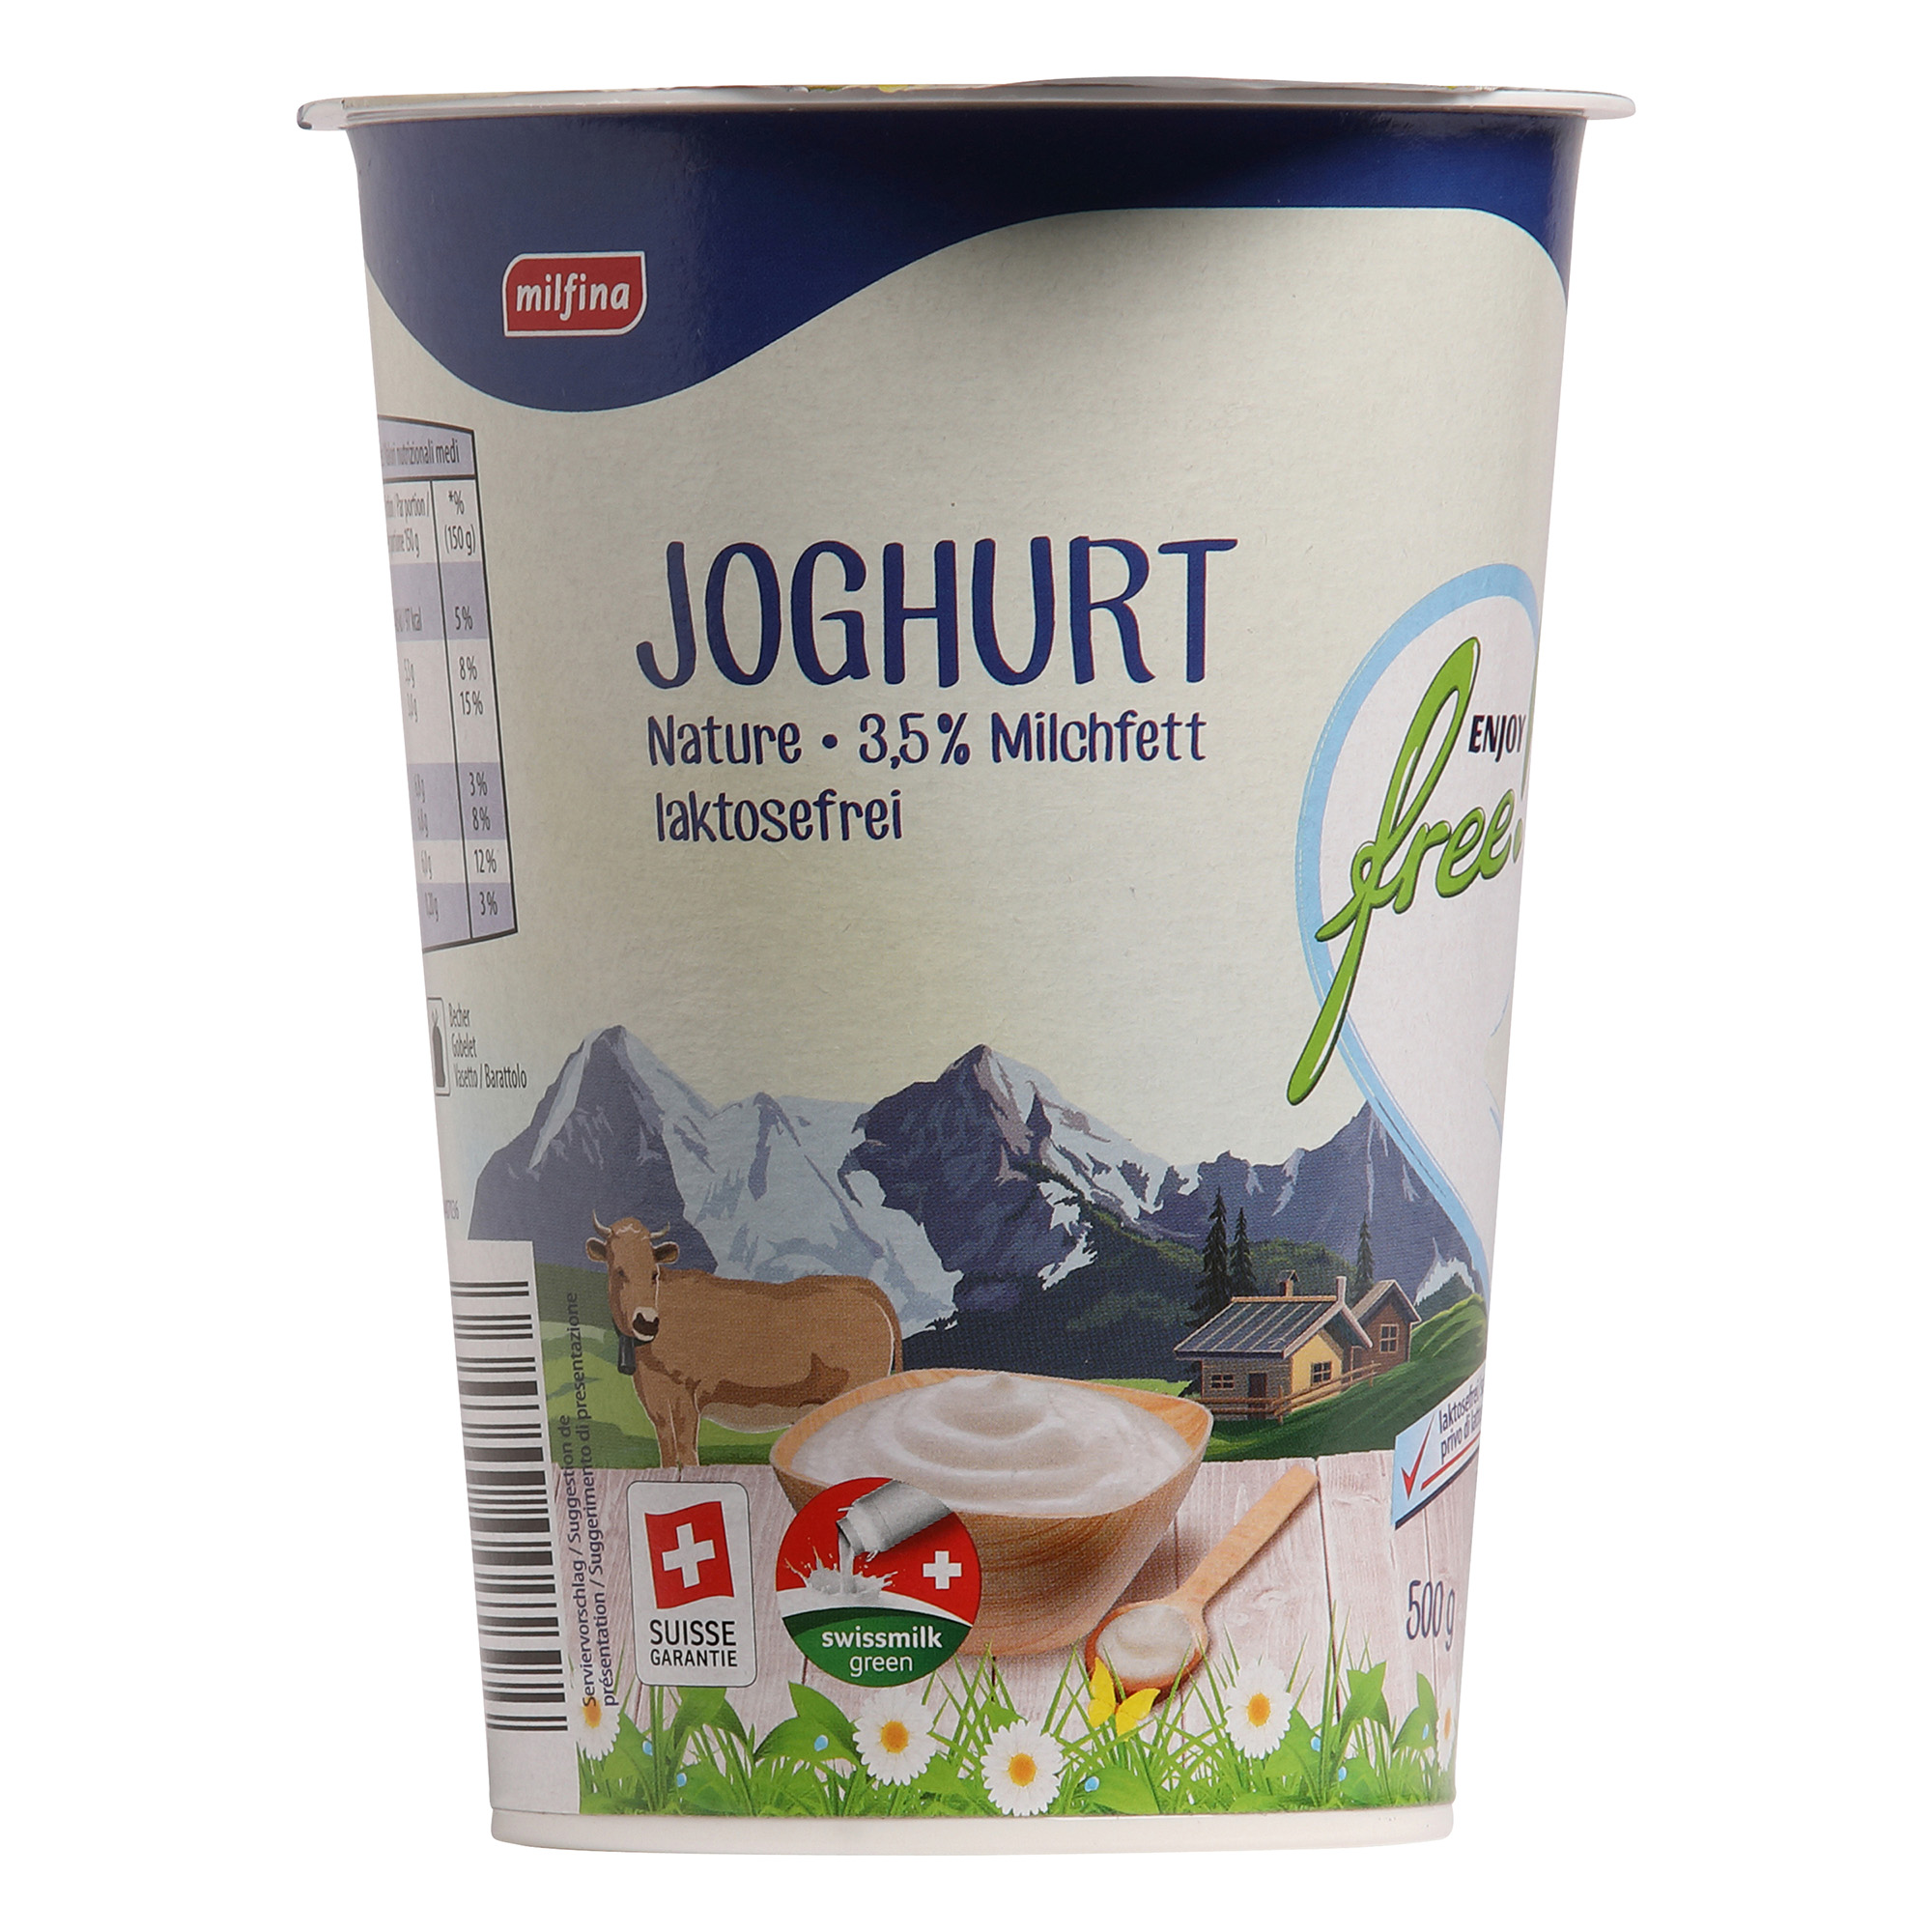 ENJOY FREE! Joghurt Nature 3.5 %, laktosefrei | ALDI-now